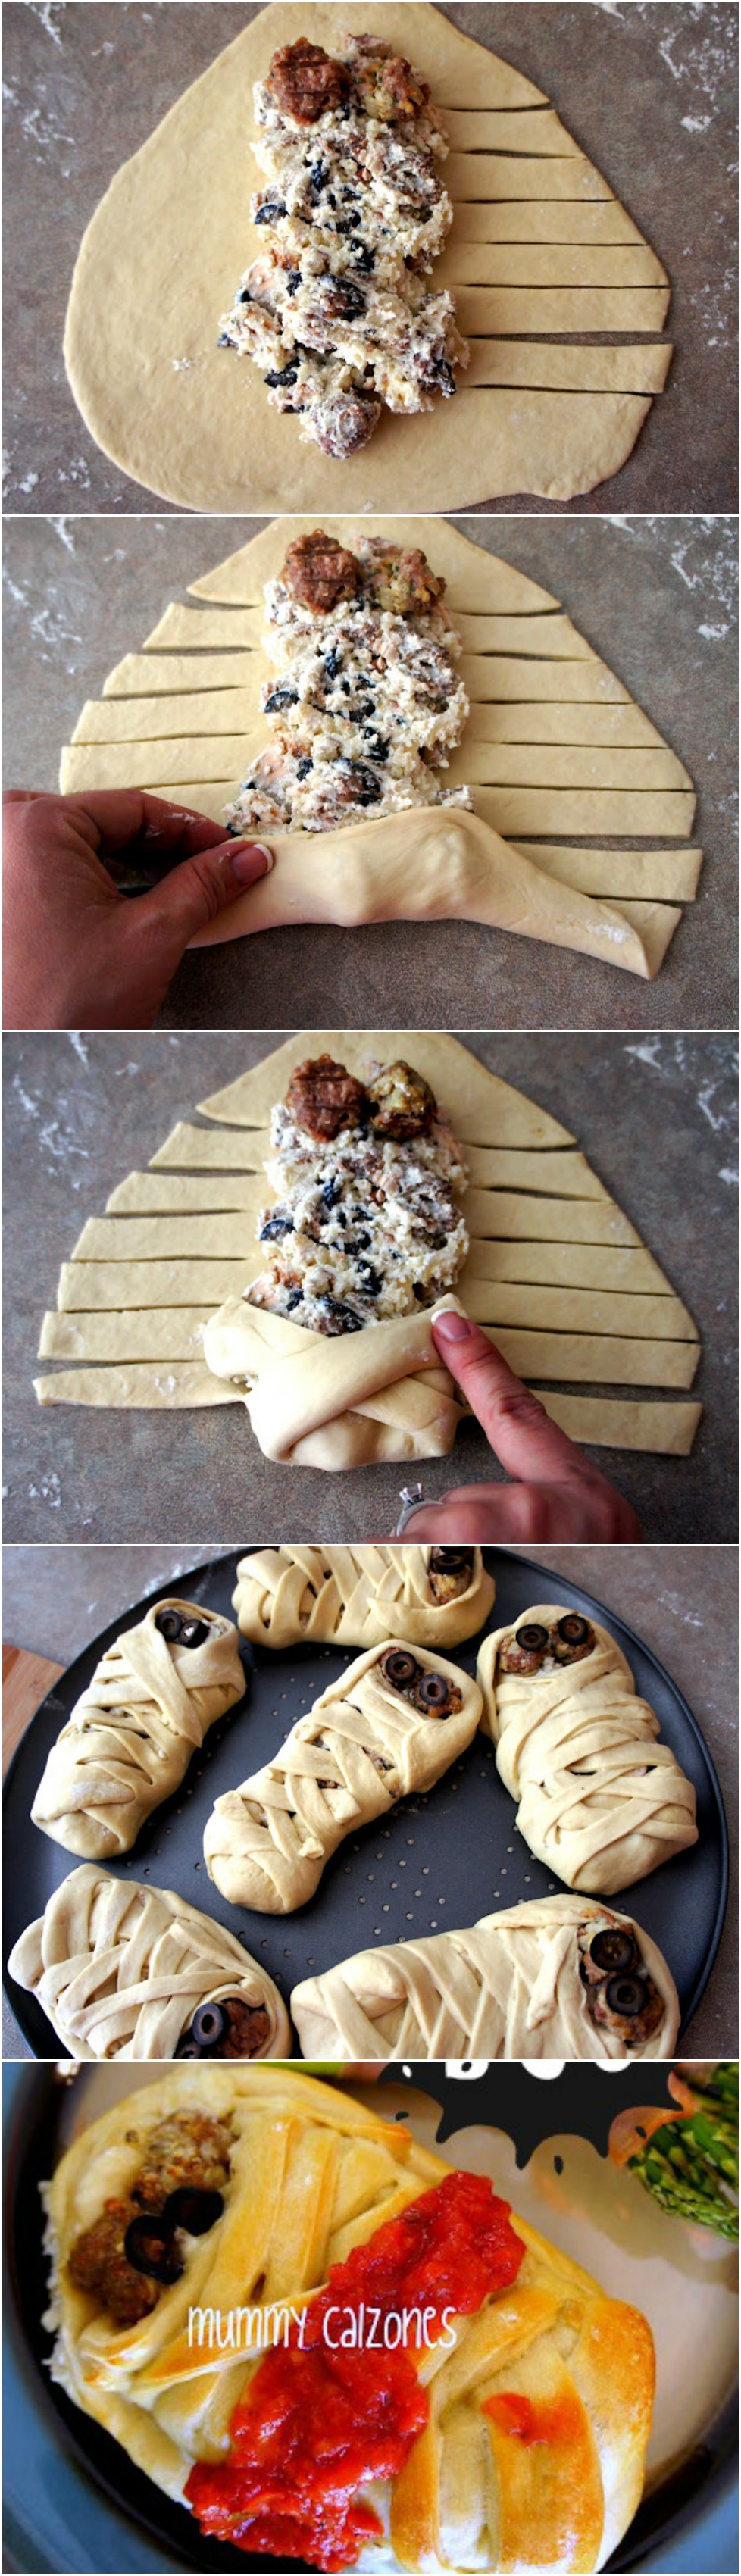 How to assemble Mummy Calzones for a fun Halloween Dinner idea!